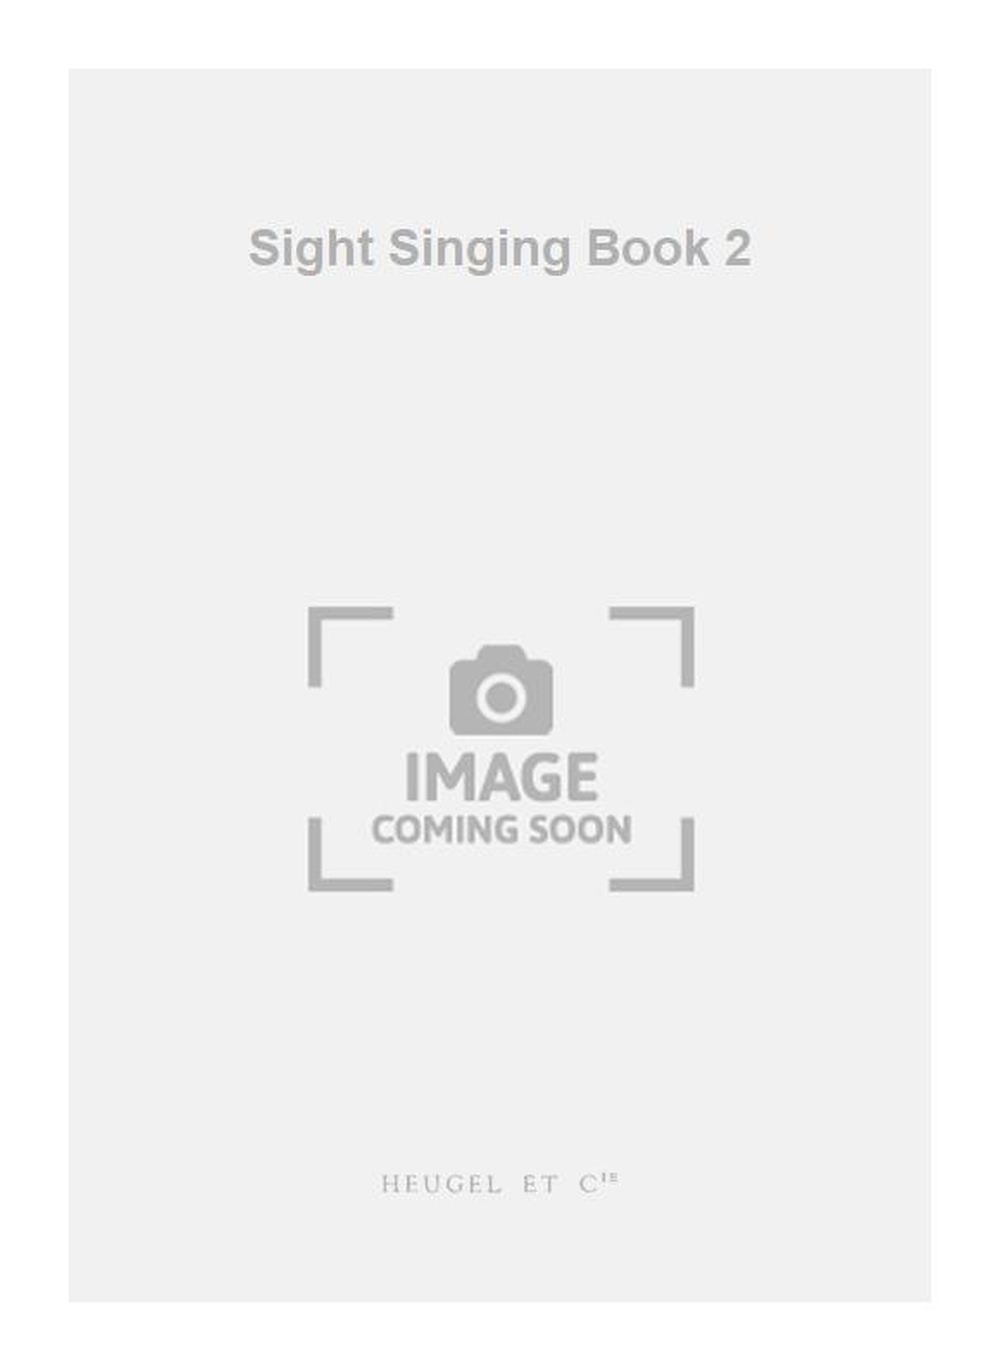 Pittion: Sight Singing Book 2